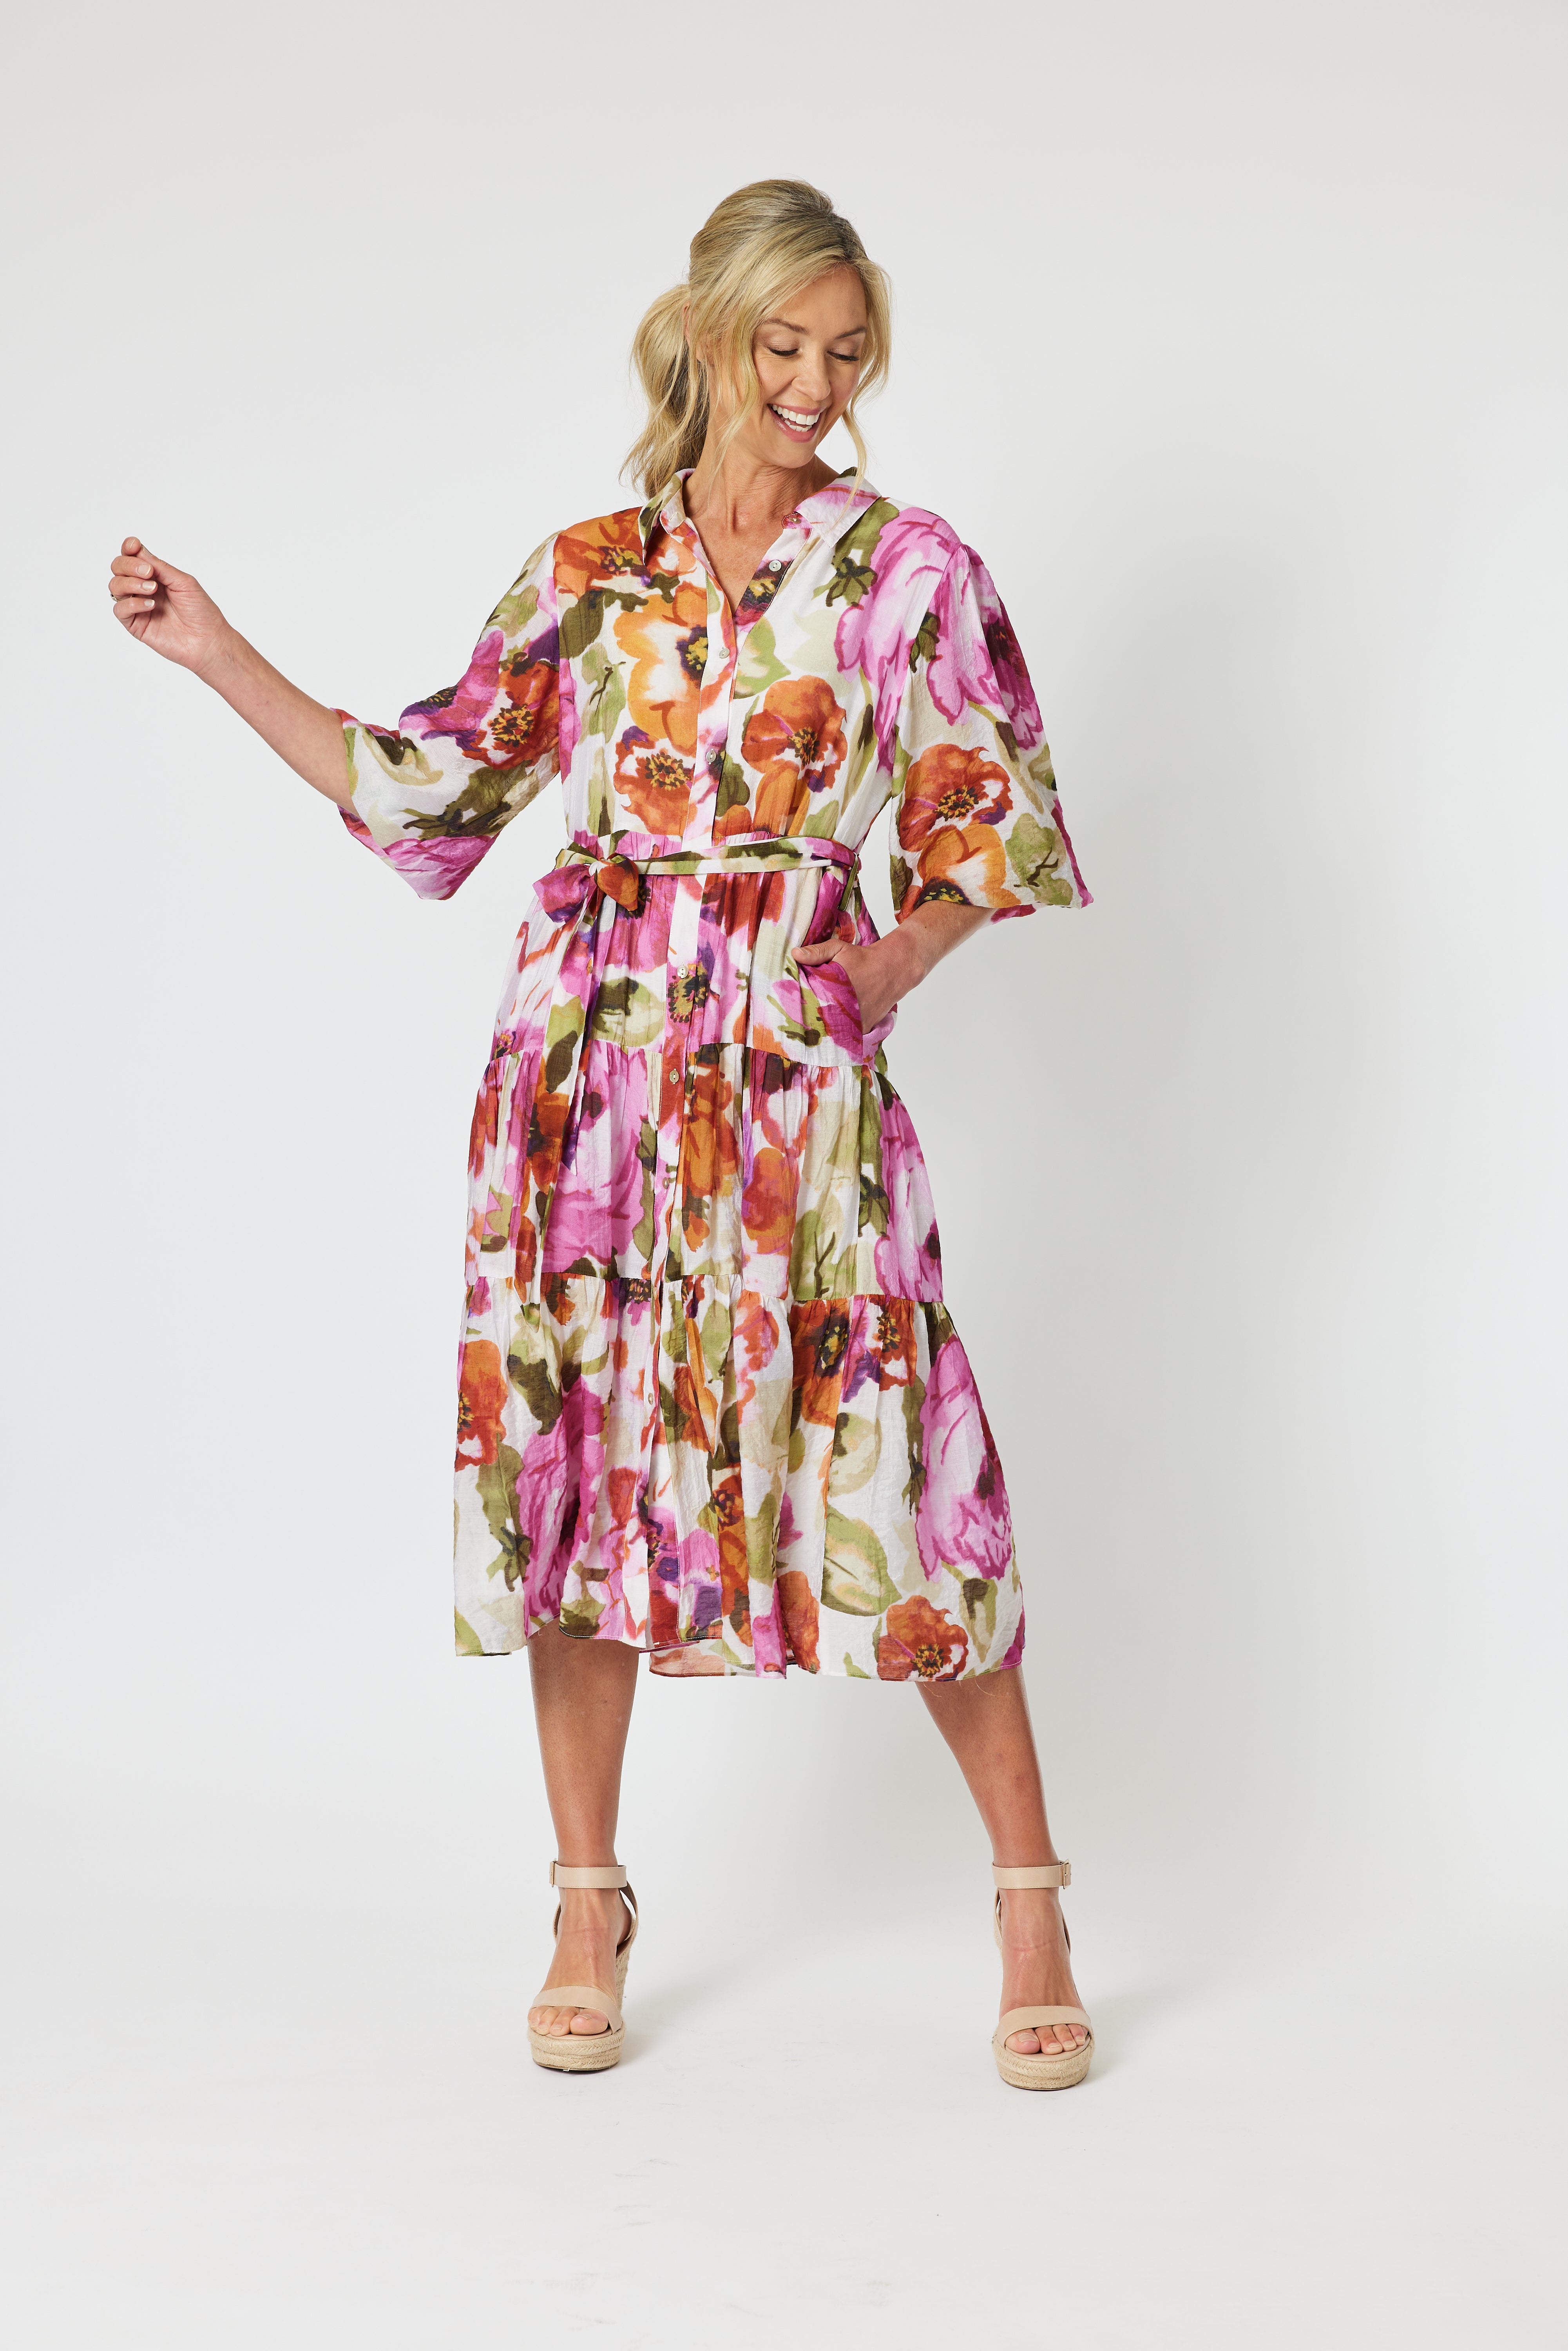 Gordon Smith Maui Floral Print Dress - Berry